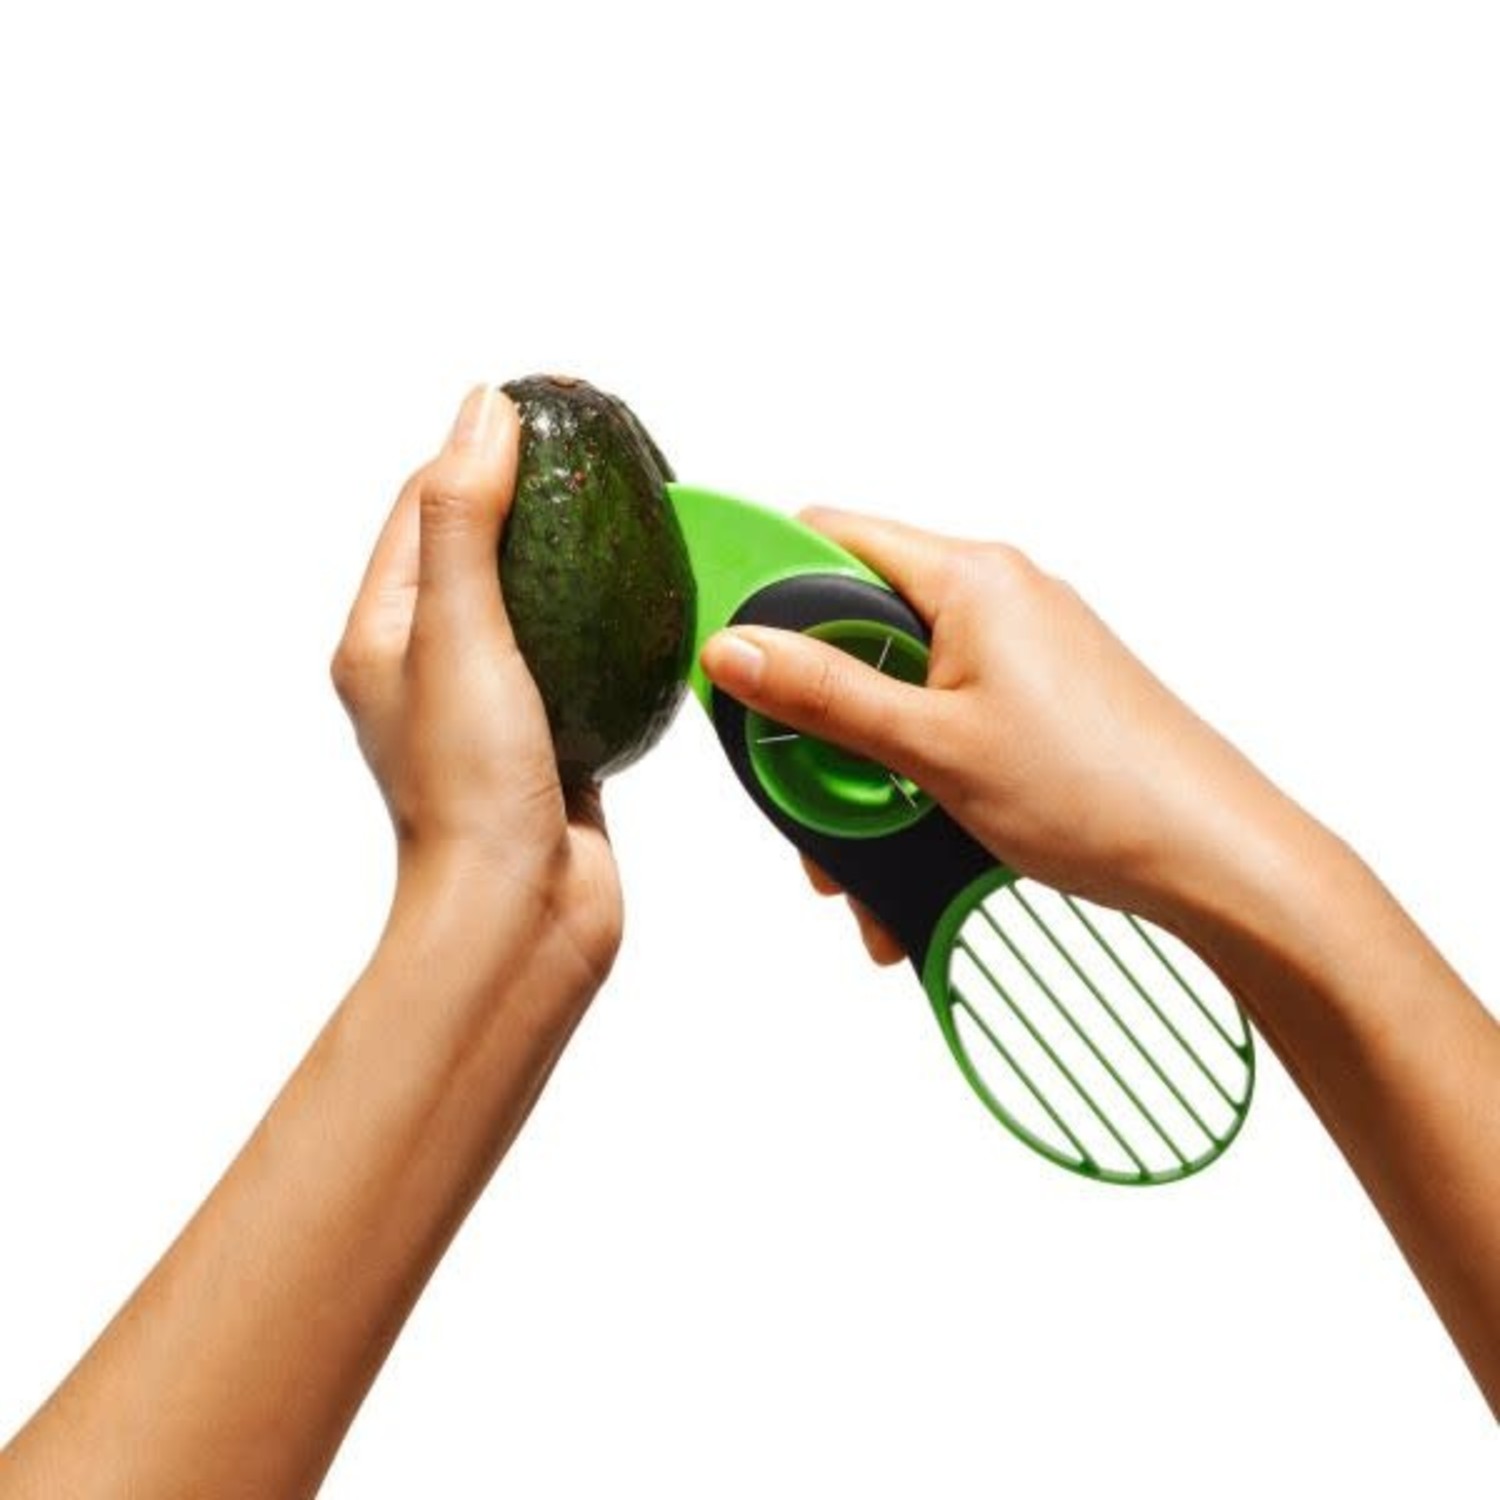 avocado tool, 3-in-1 TEMP - Whisk